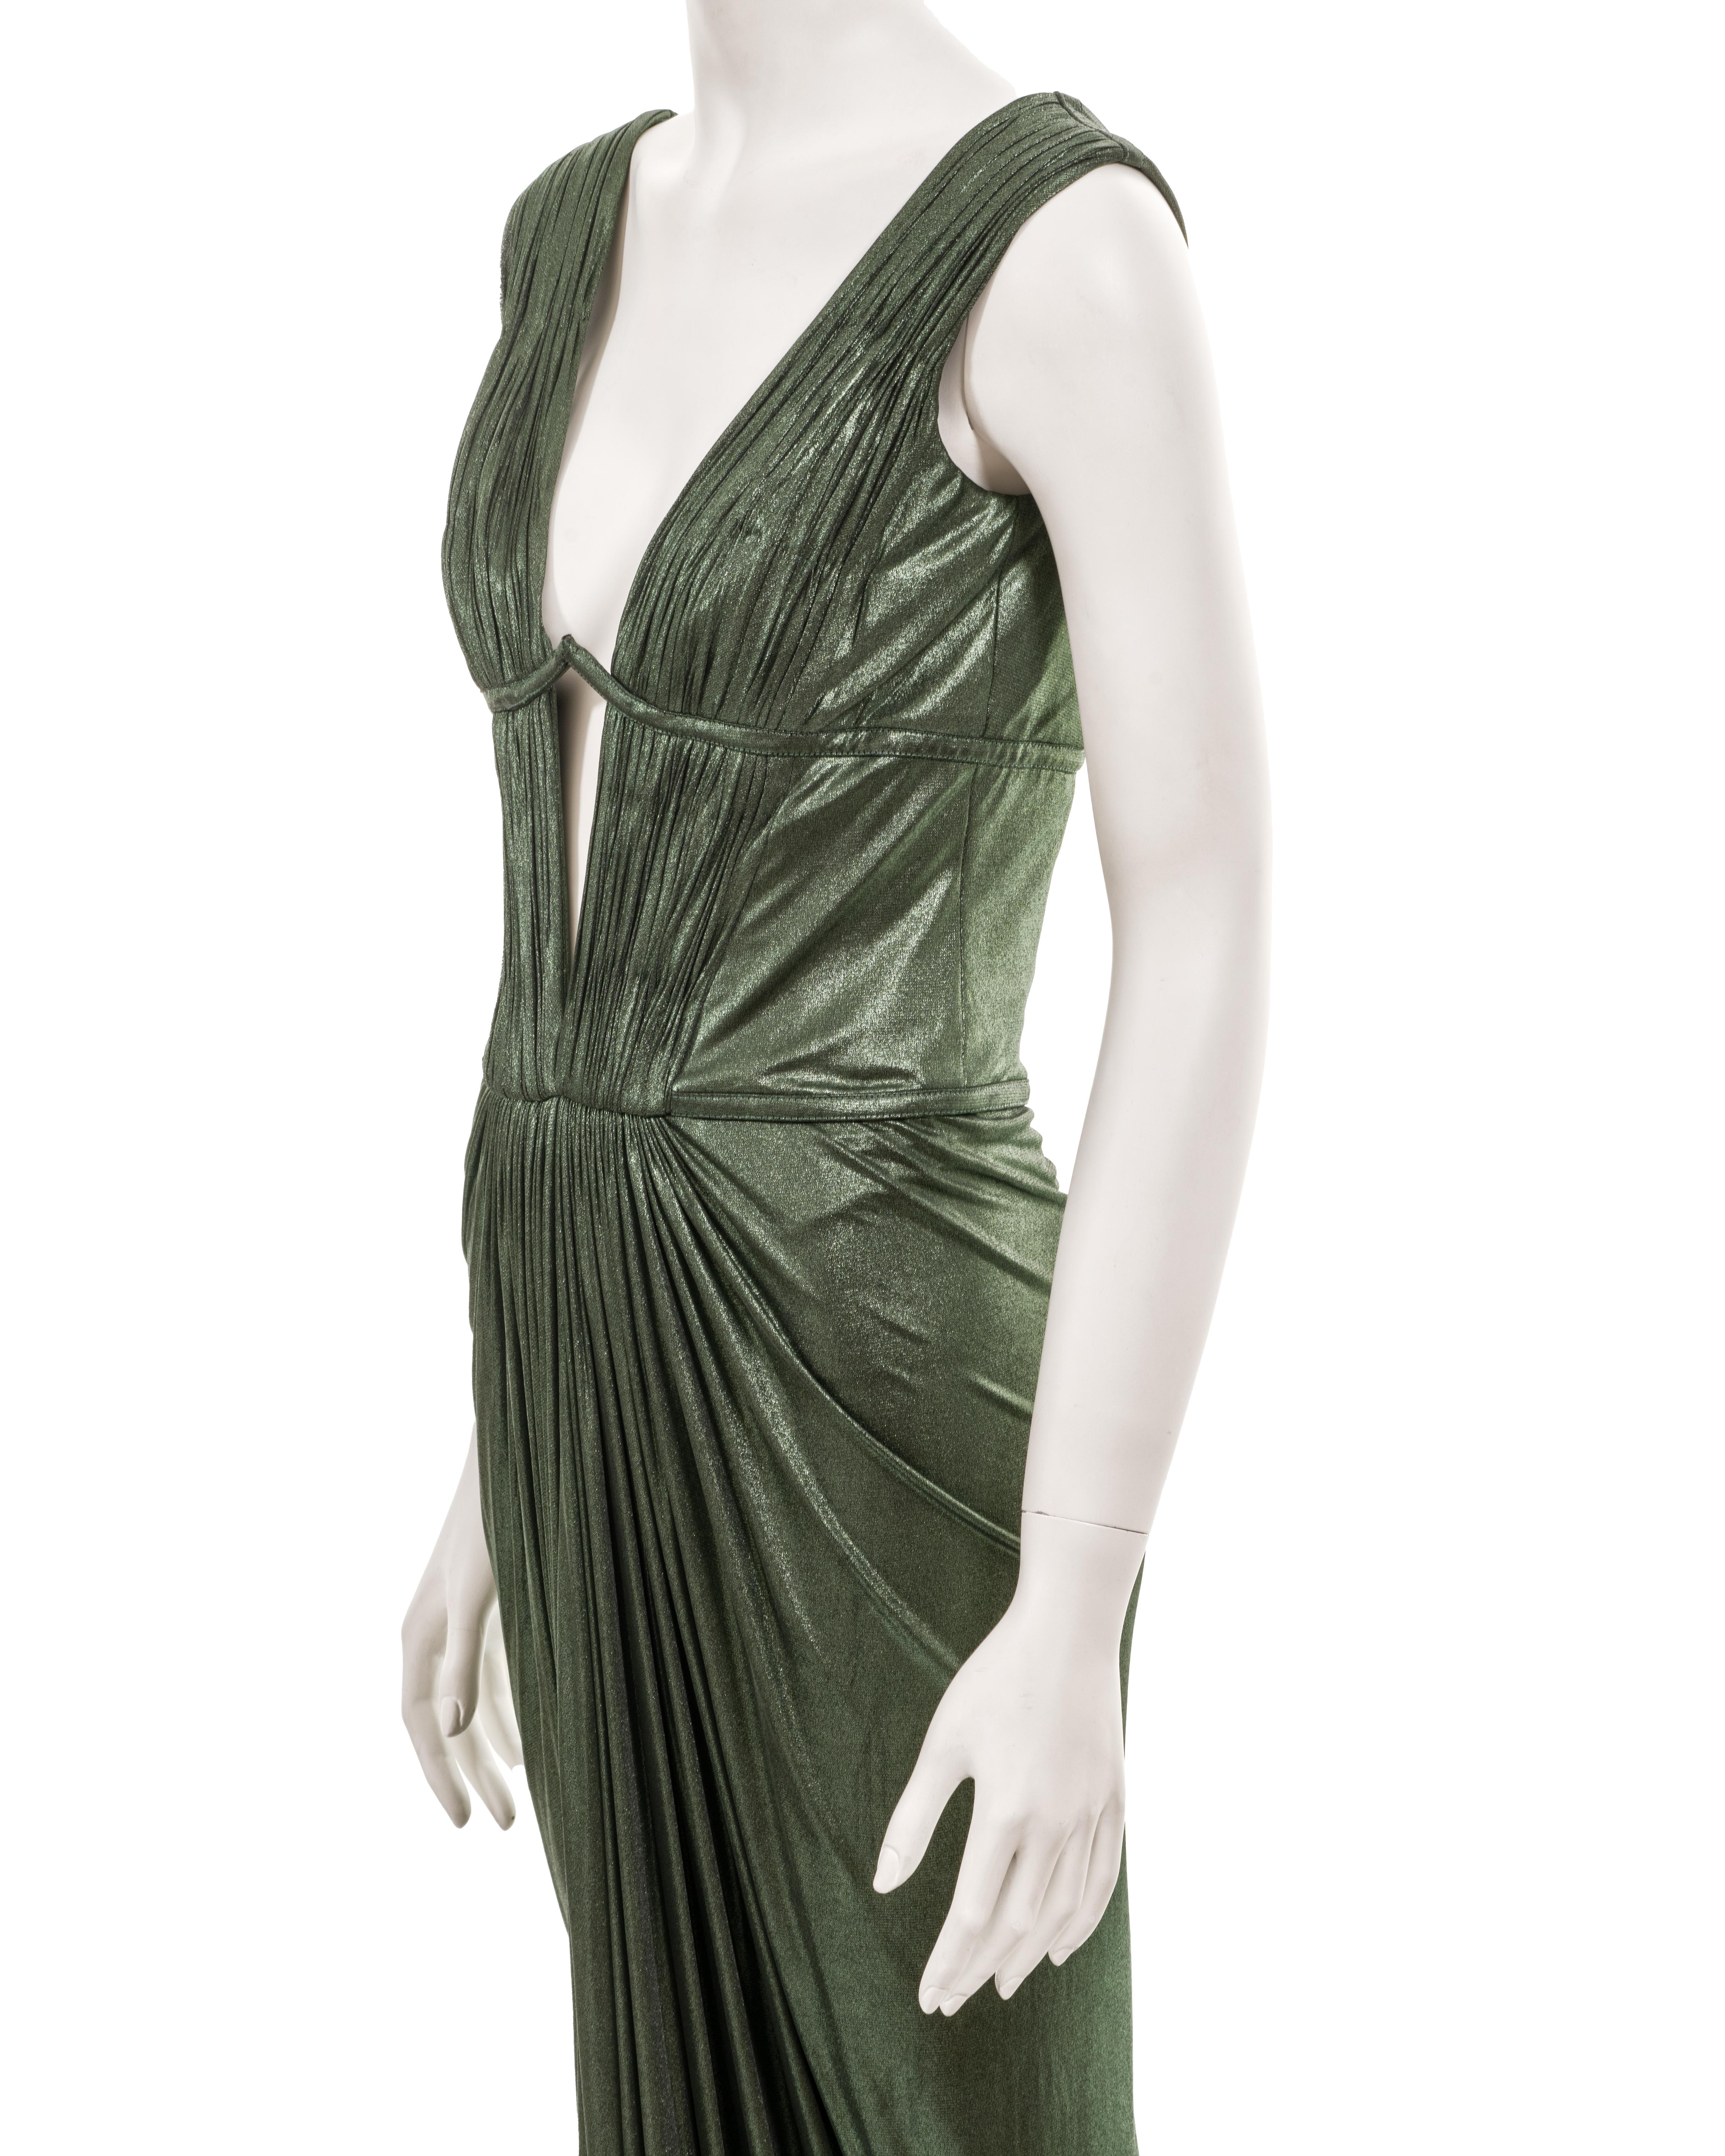 Roberto Cavalli pleated metallic green cupro 'Cleopatra' evening dress, fw 2007 For Sale 6